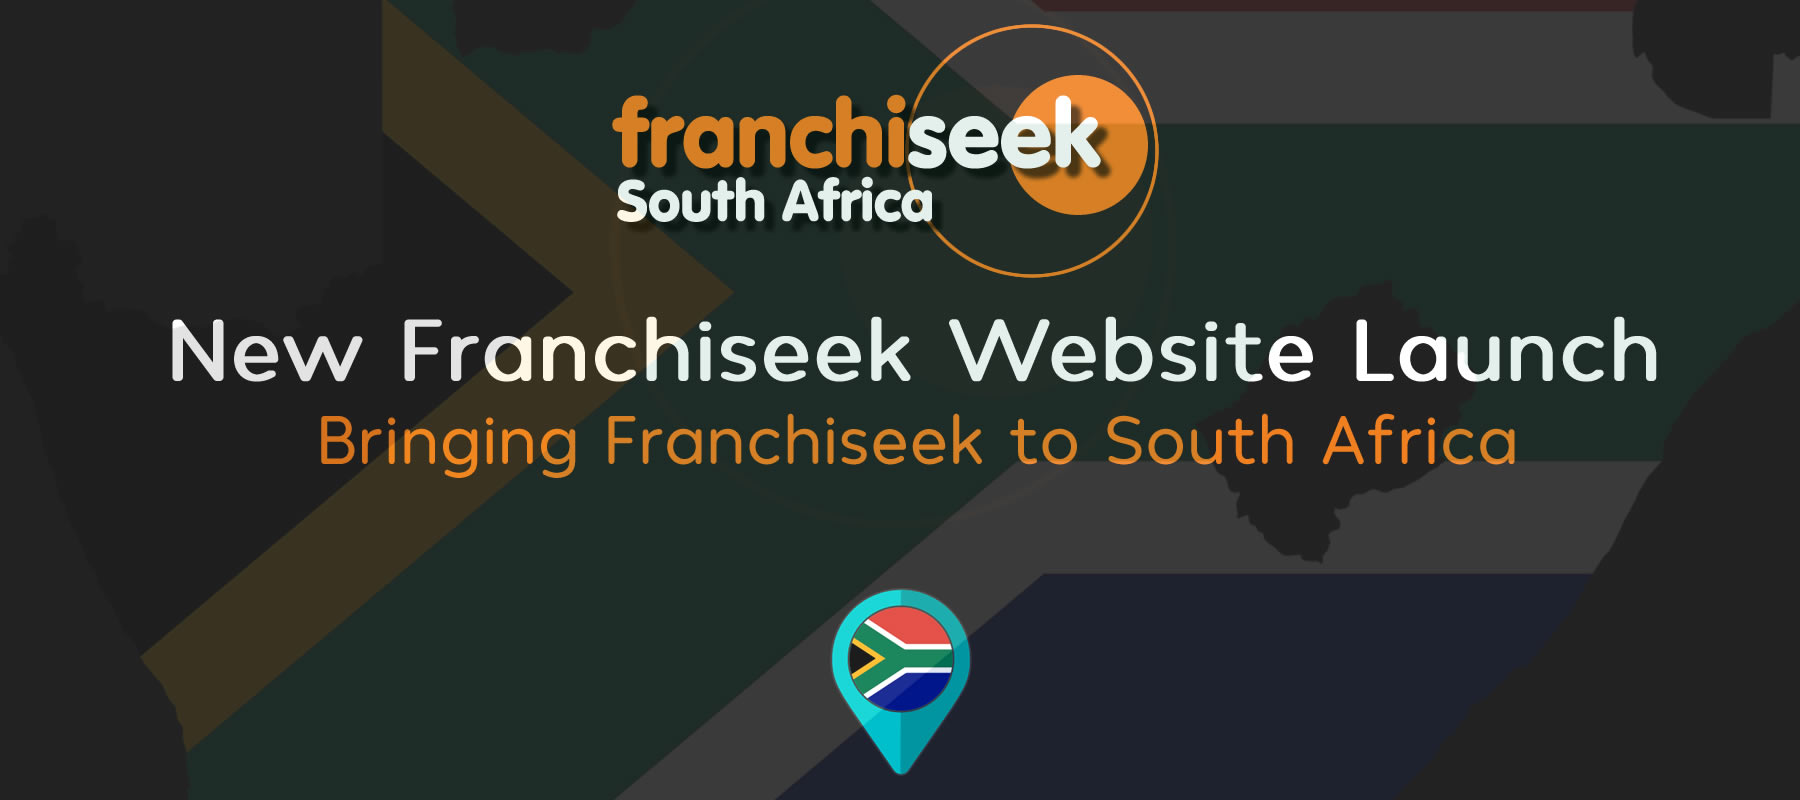 Franchiseek South Africa